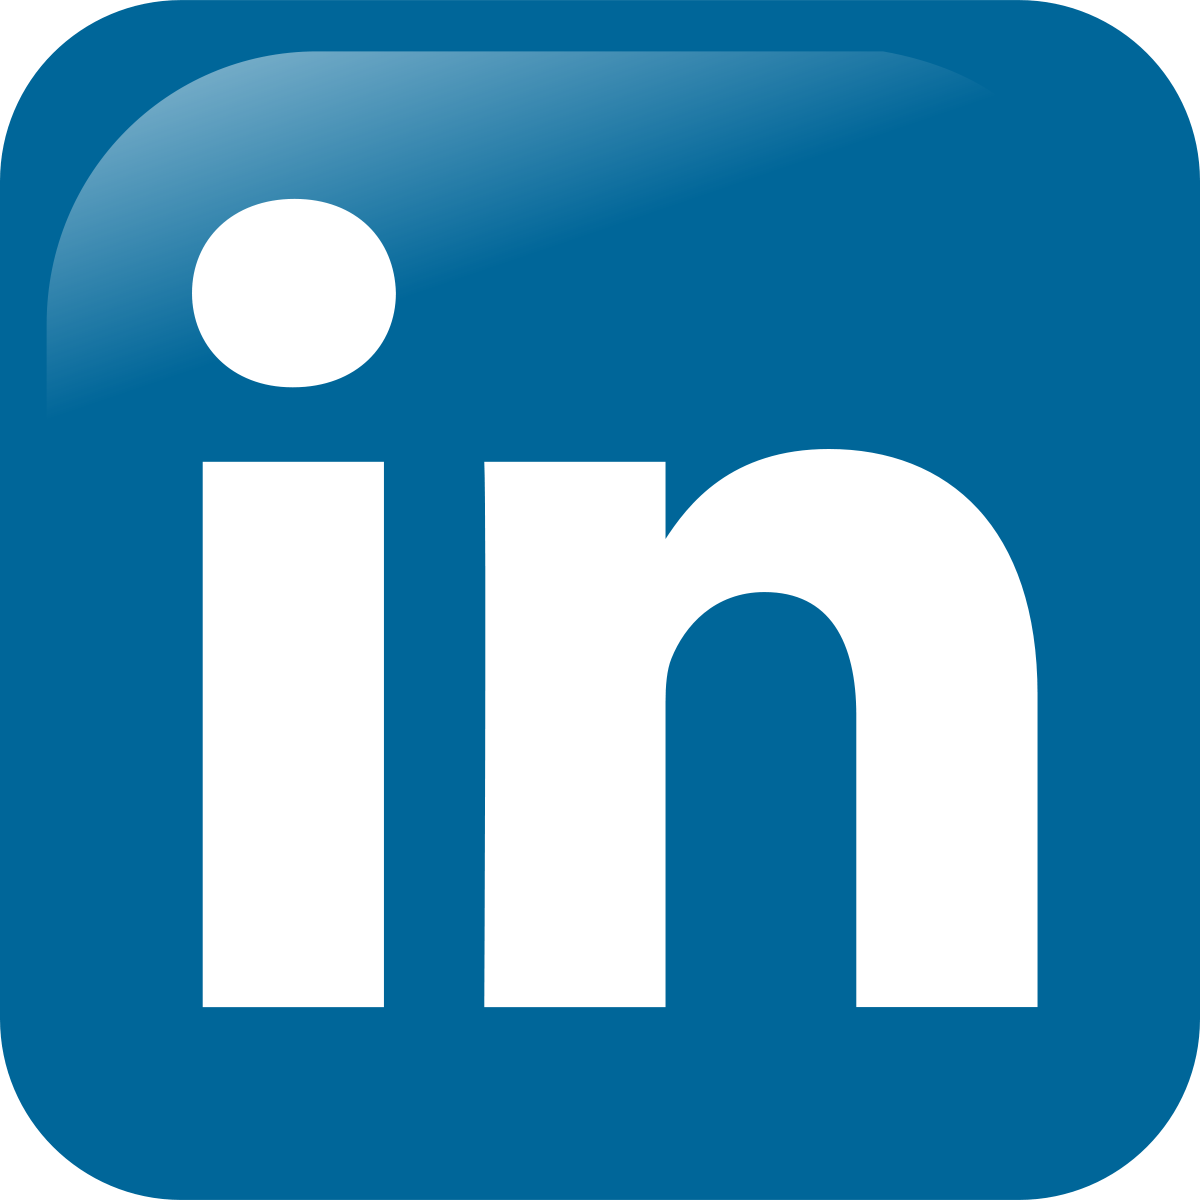 Contact Me On LinkedIn Logo - Timeline of LinkedIn